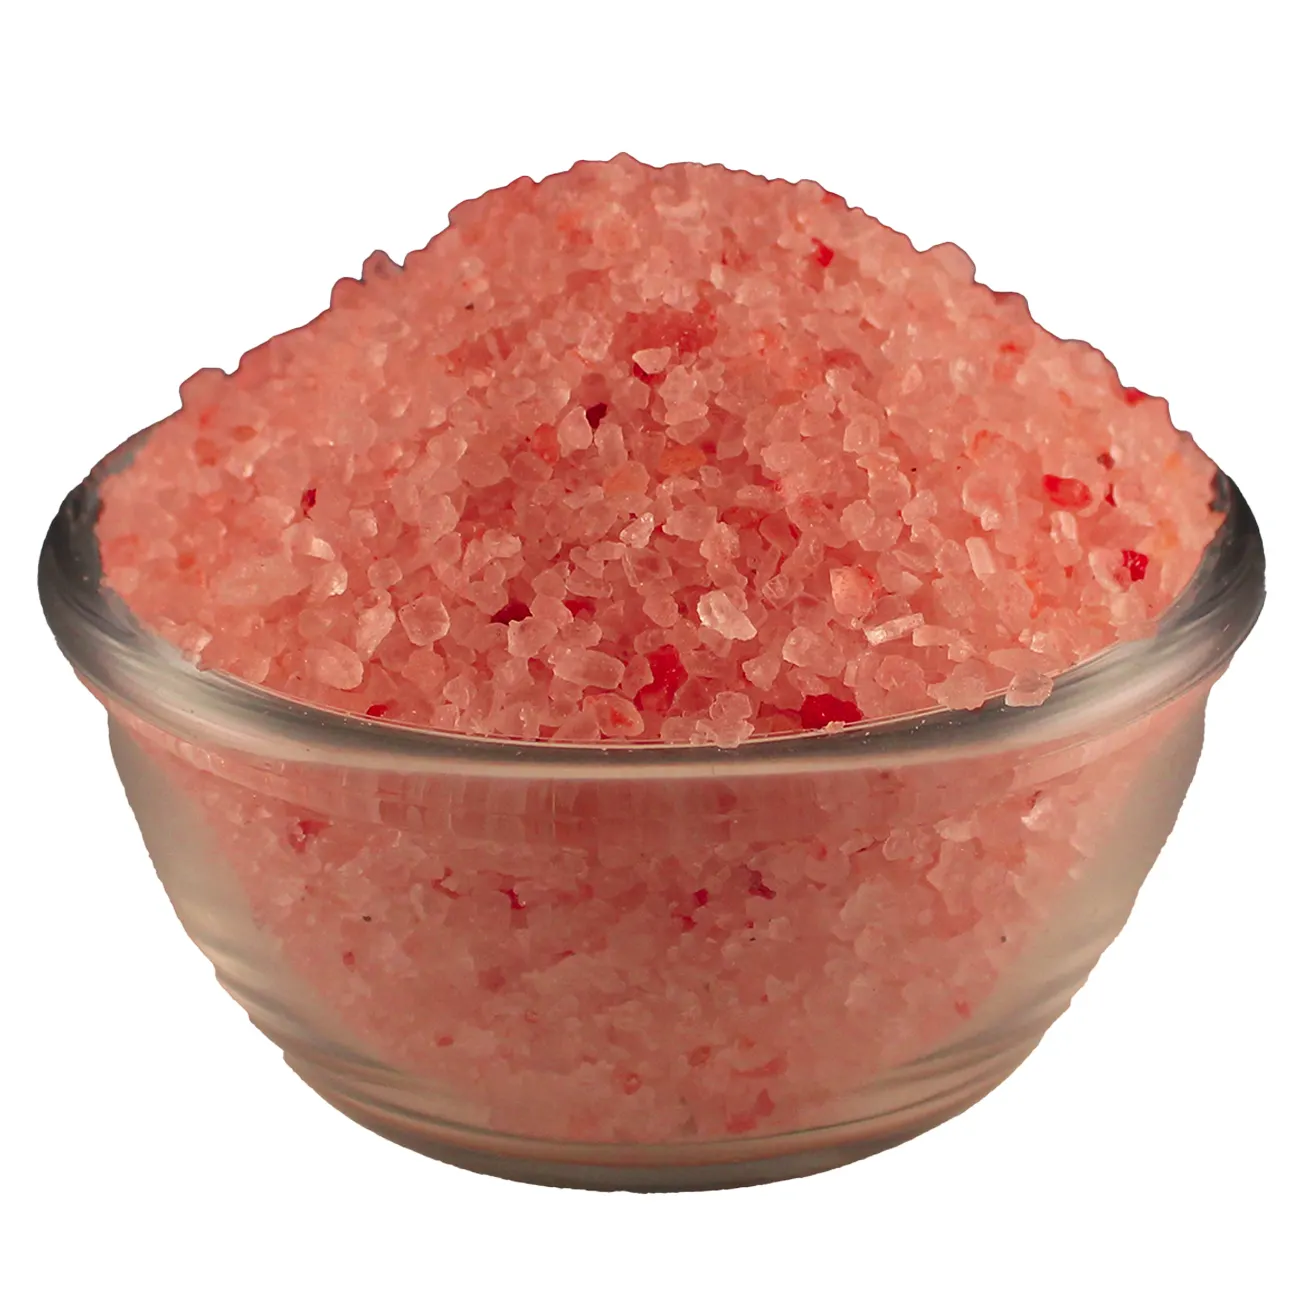 RED Himalayan Food Salt 100% Natural High Quality Premium Pink/Black/White healthy Edible Salt, Hot Selling table Salt